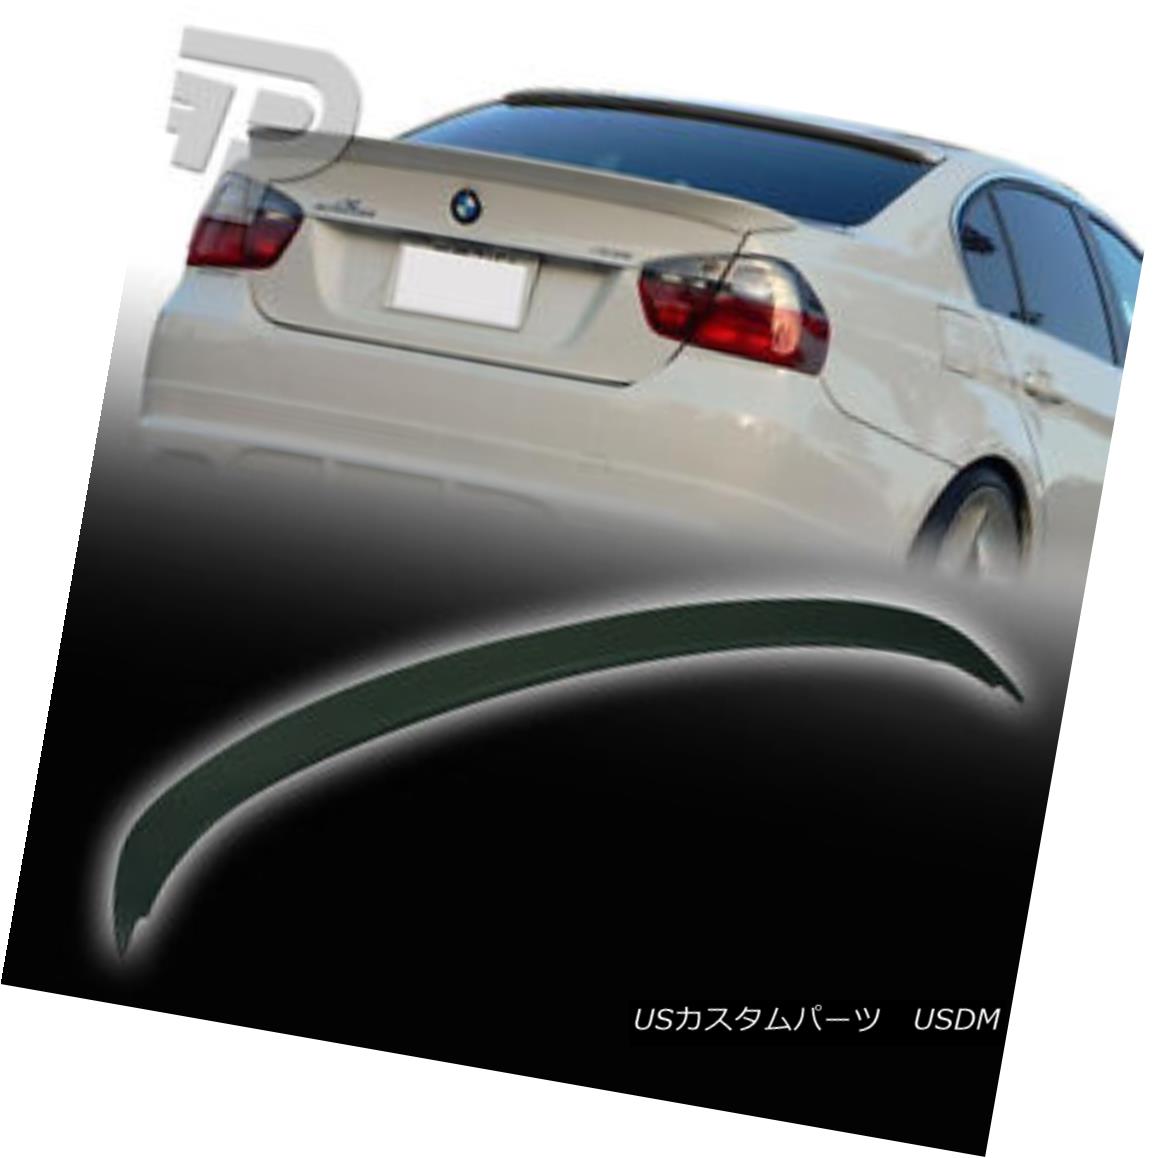 UNPAINTED 3-SERIES BMW E90サルーンAルックブーツウイングTRUNK SPOILER 06-11